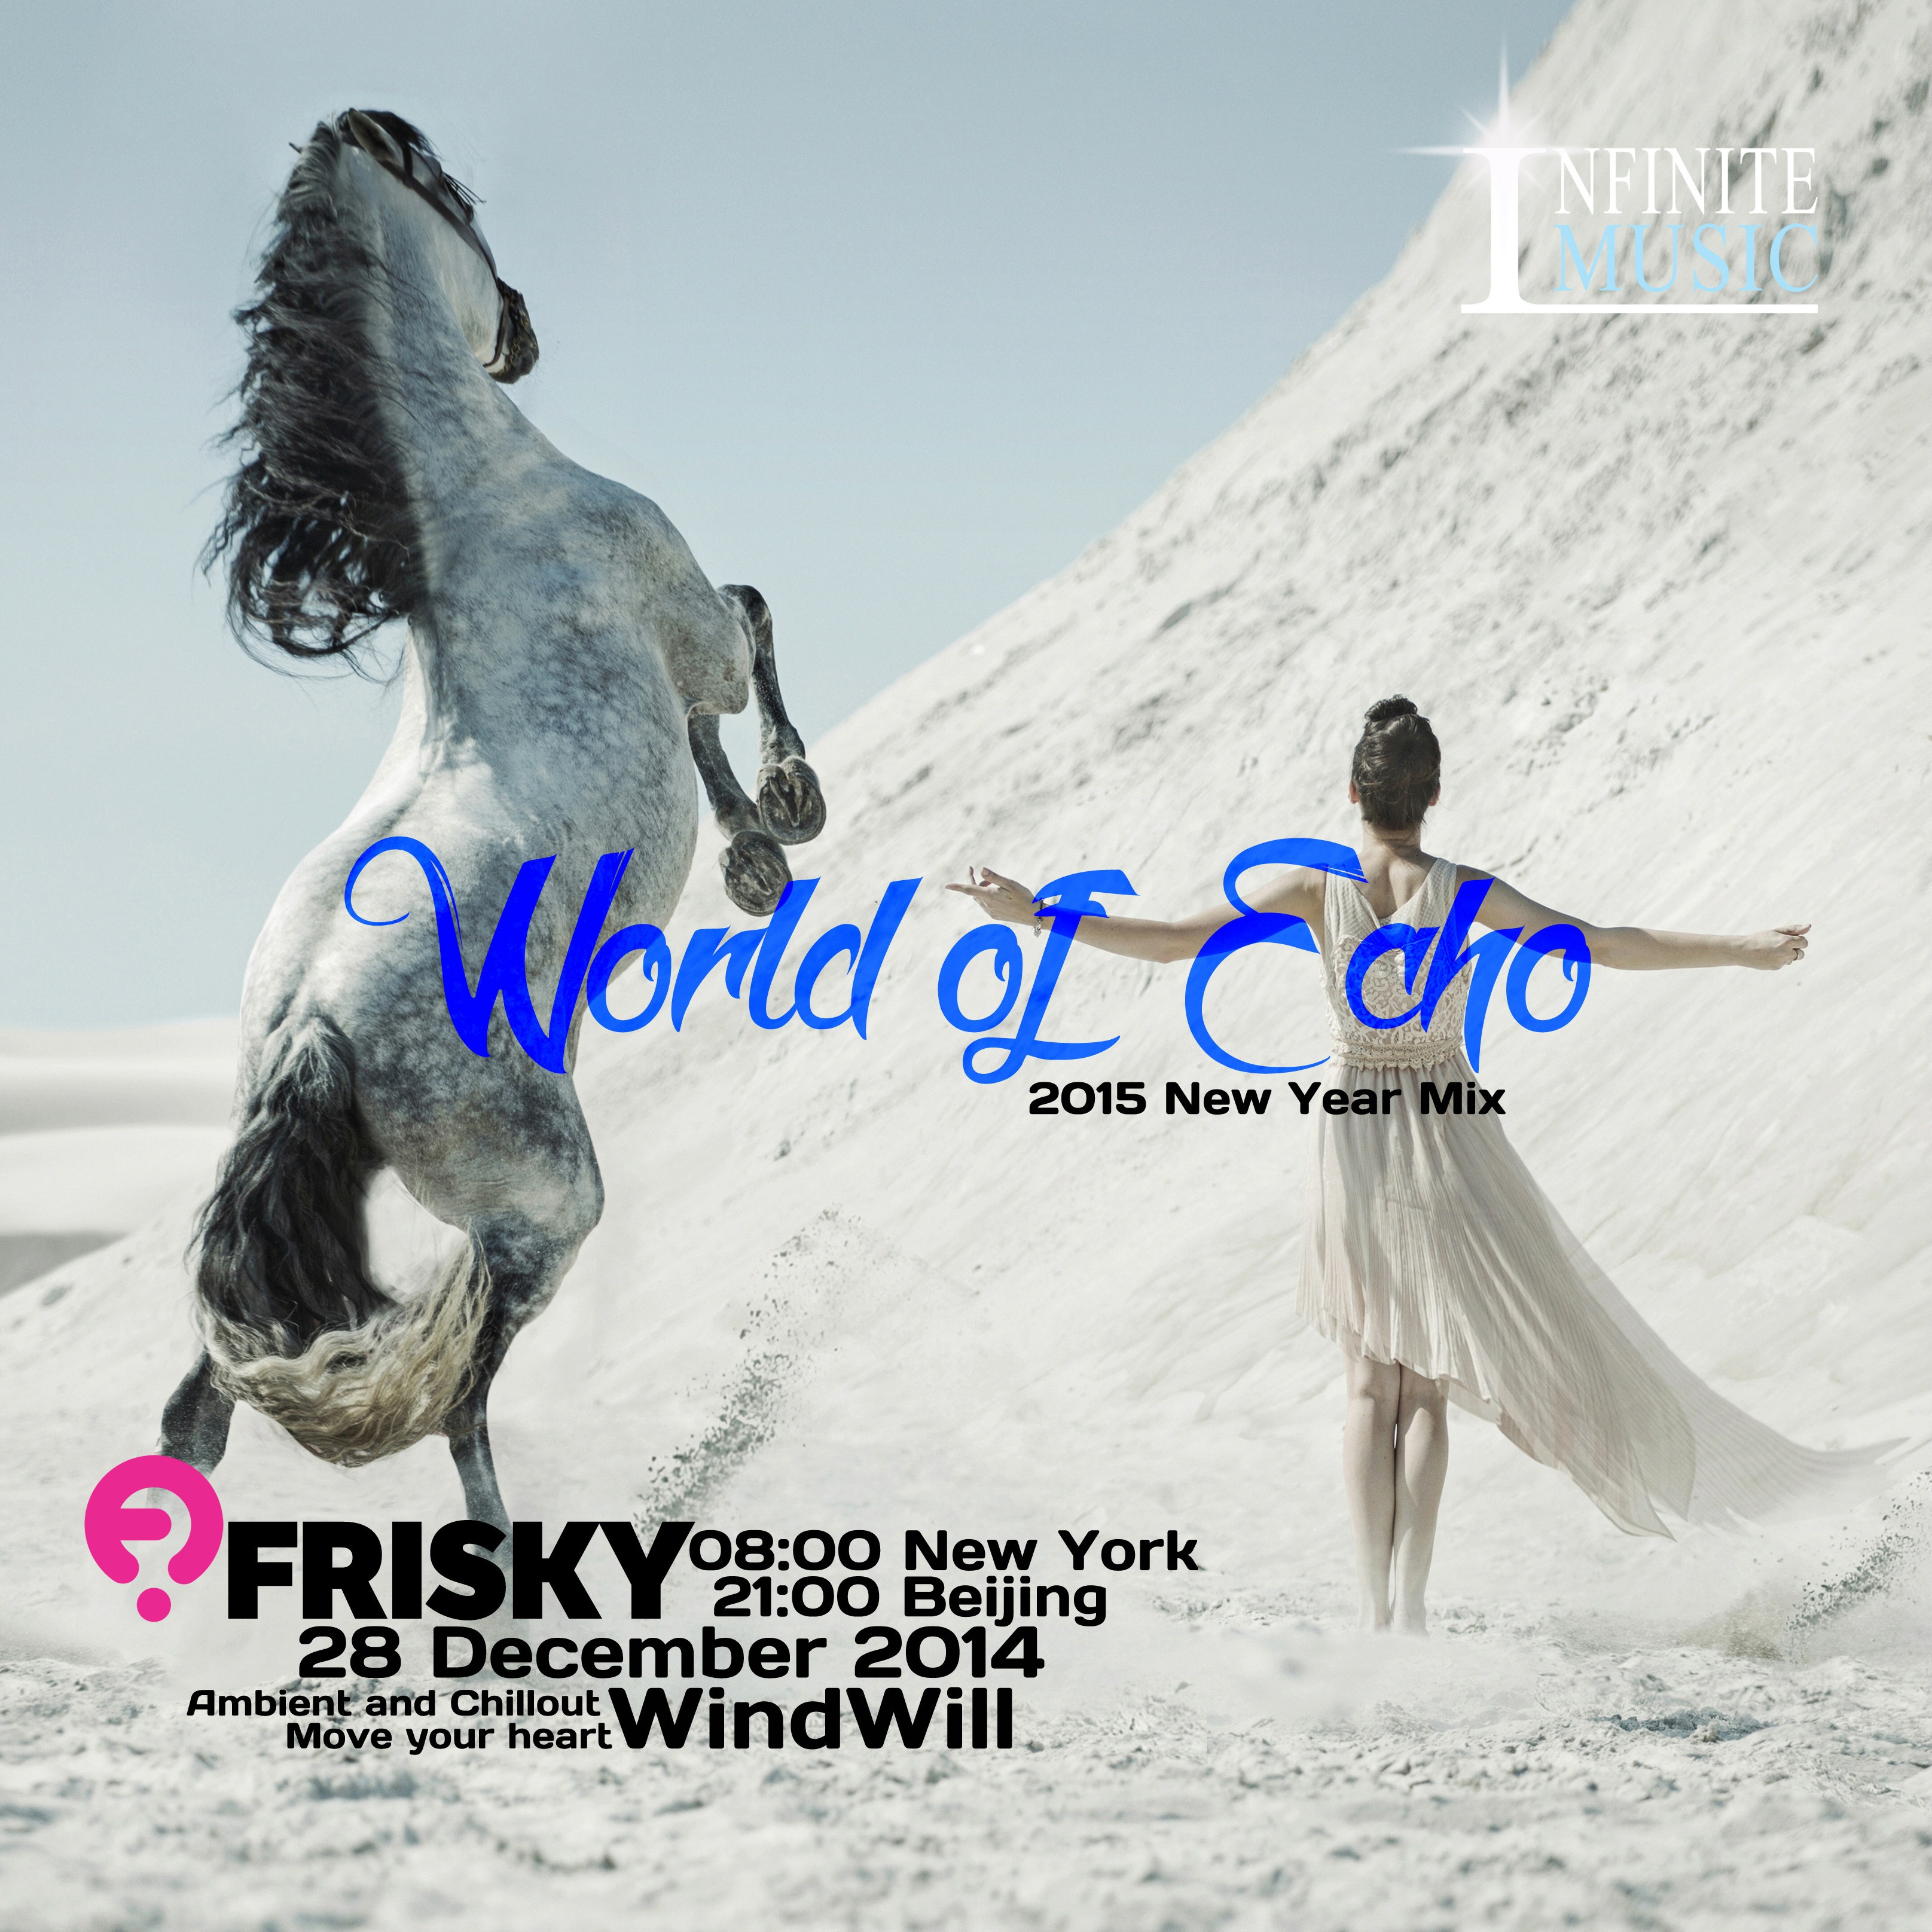 World of Echo 2015 New Year Mix